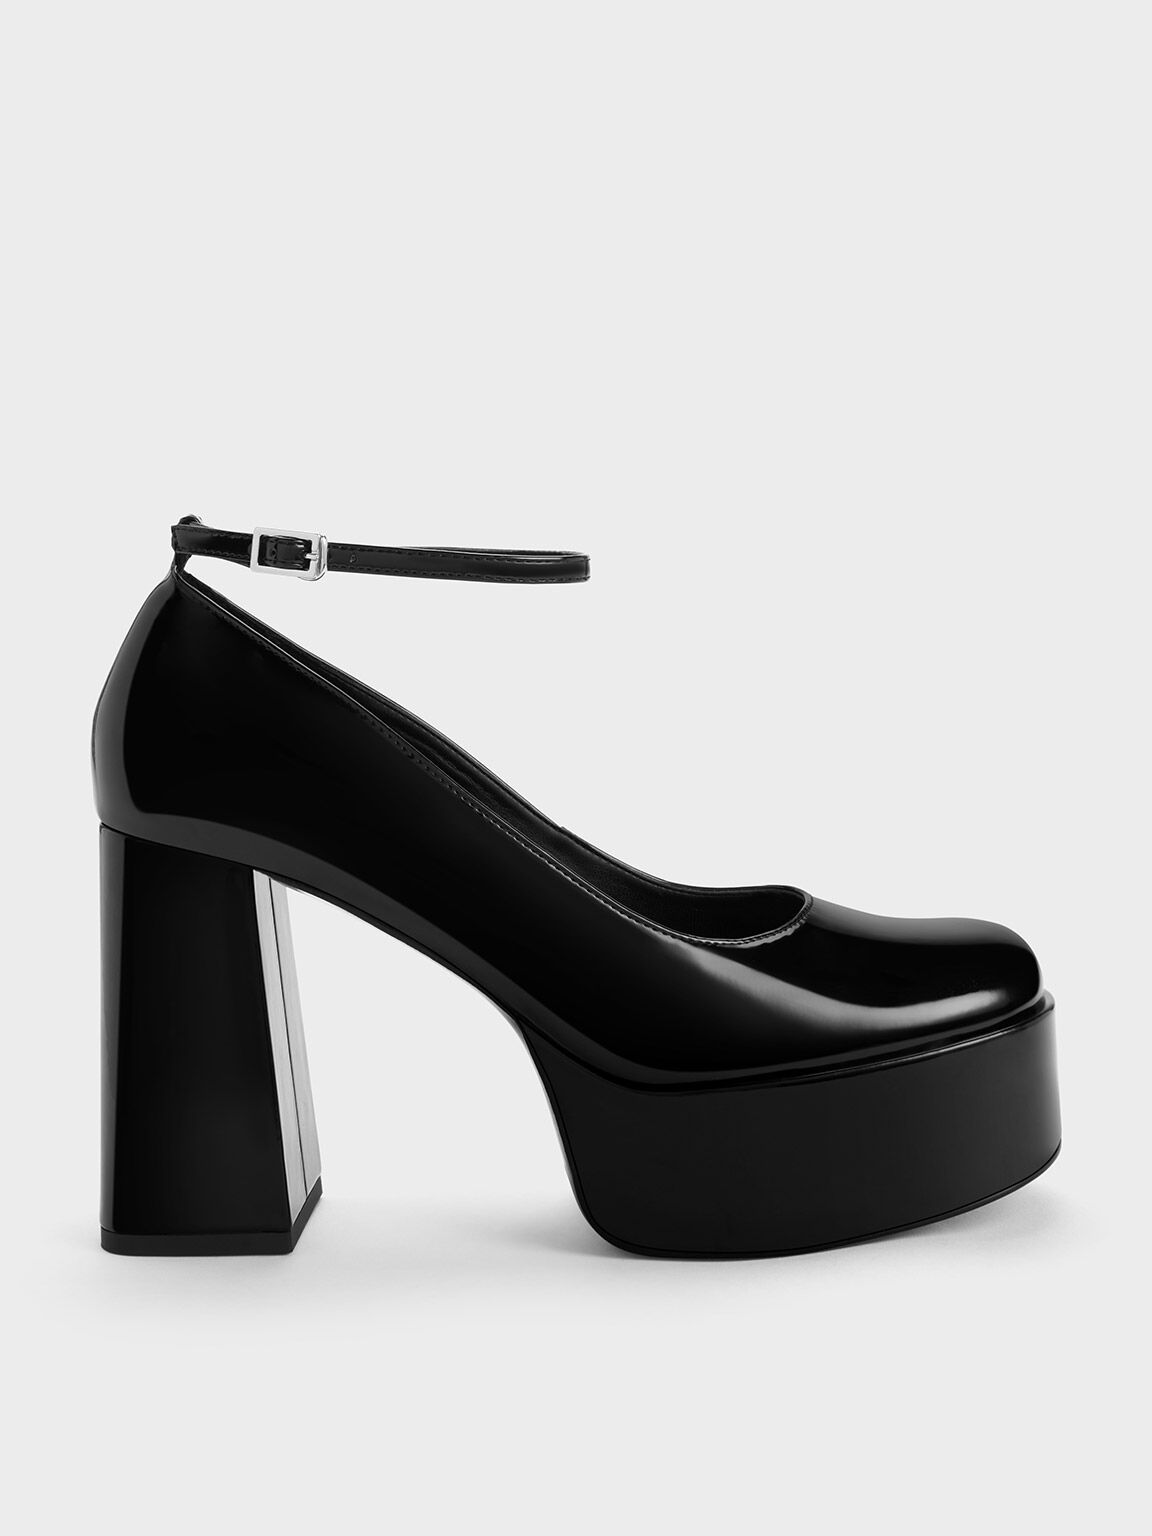 6 inches black very high heels platform pump Vector Image